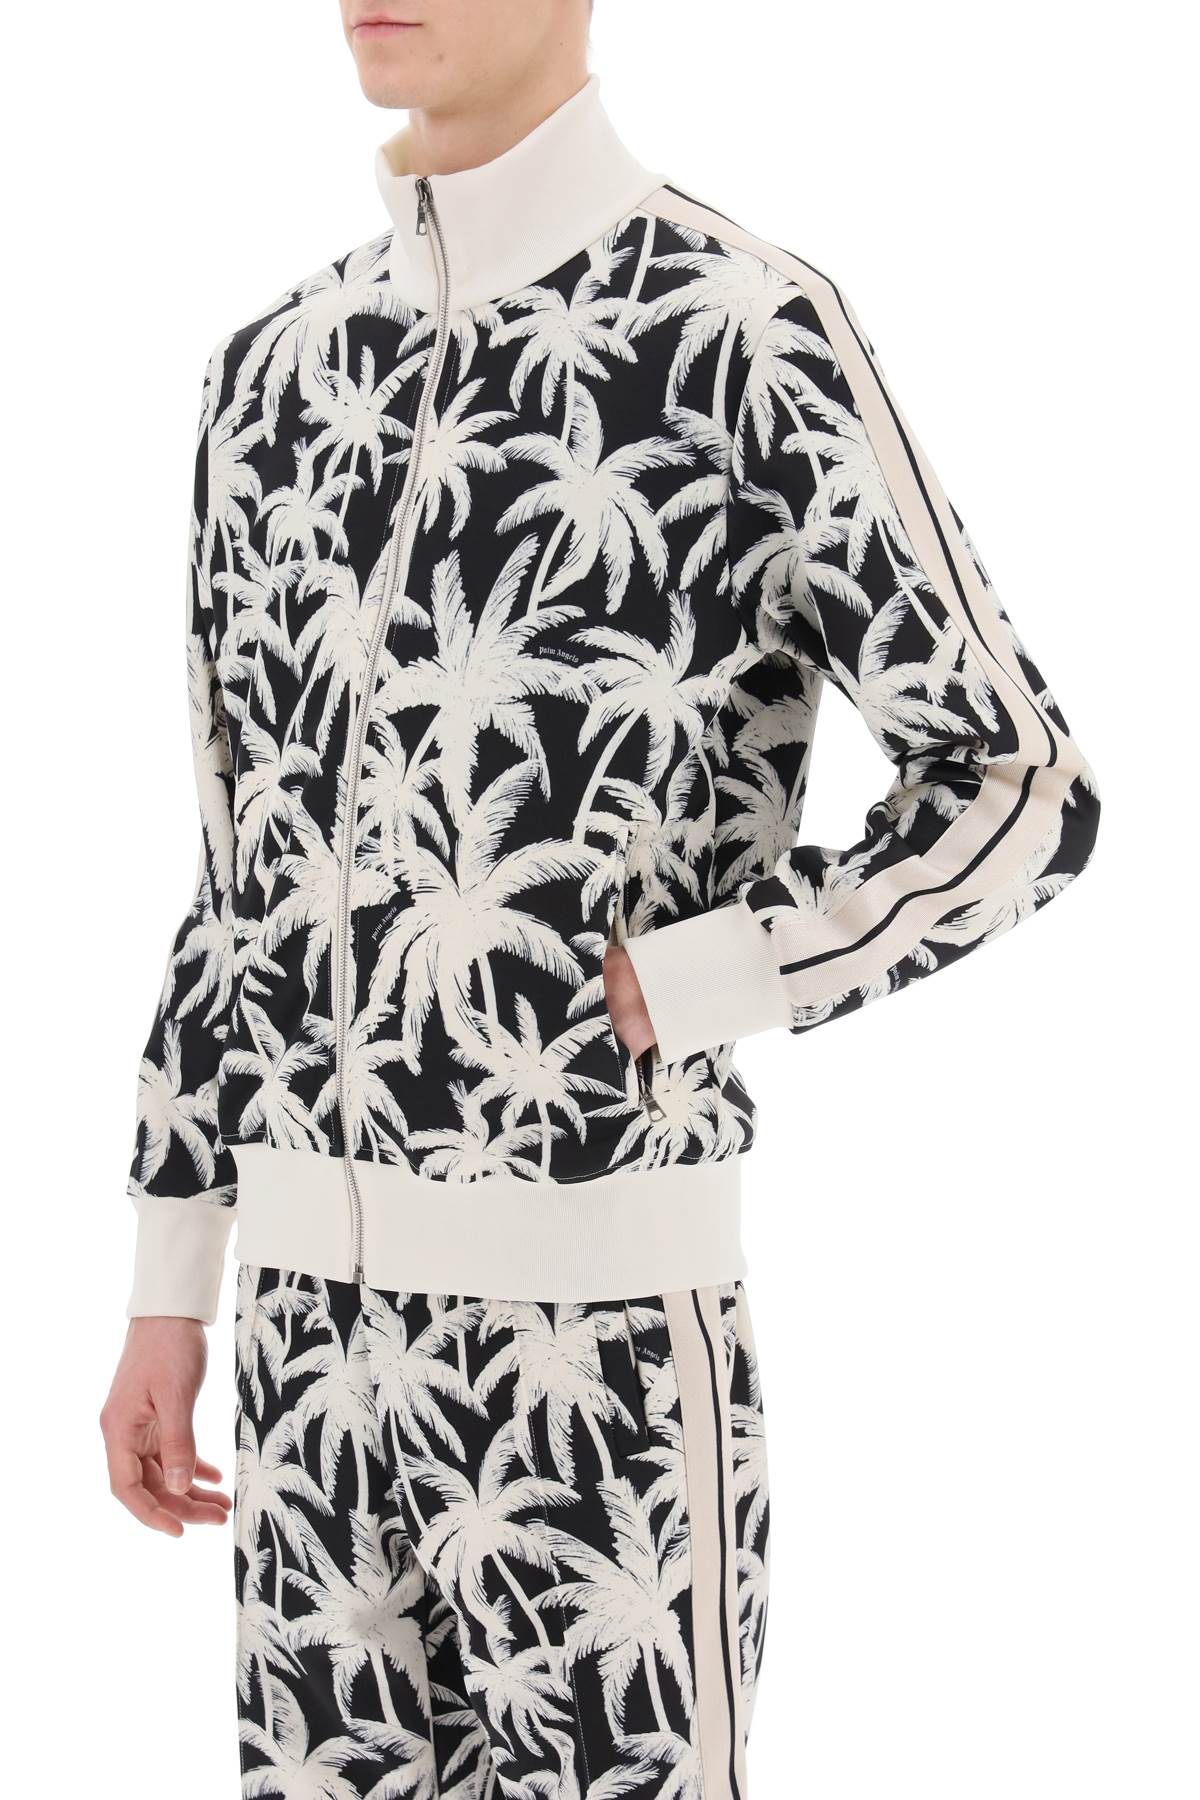 Palm angels zip-up sweatshirt with palms print-3